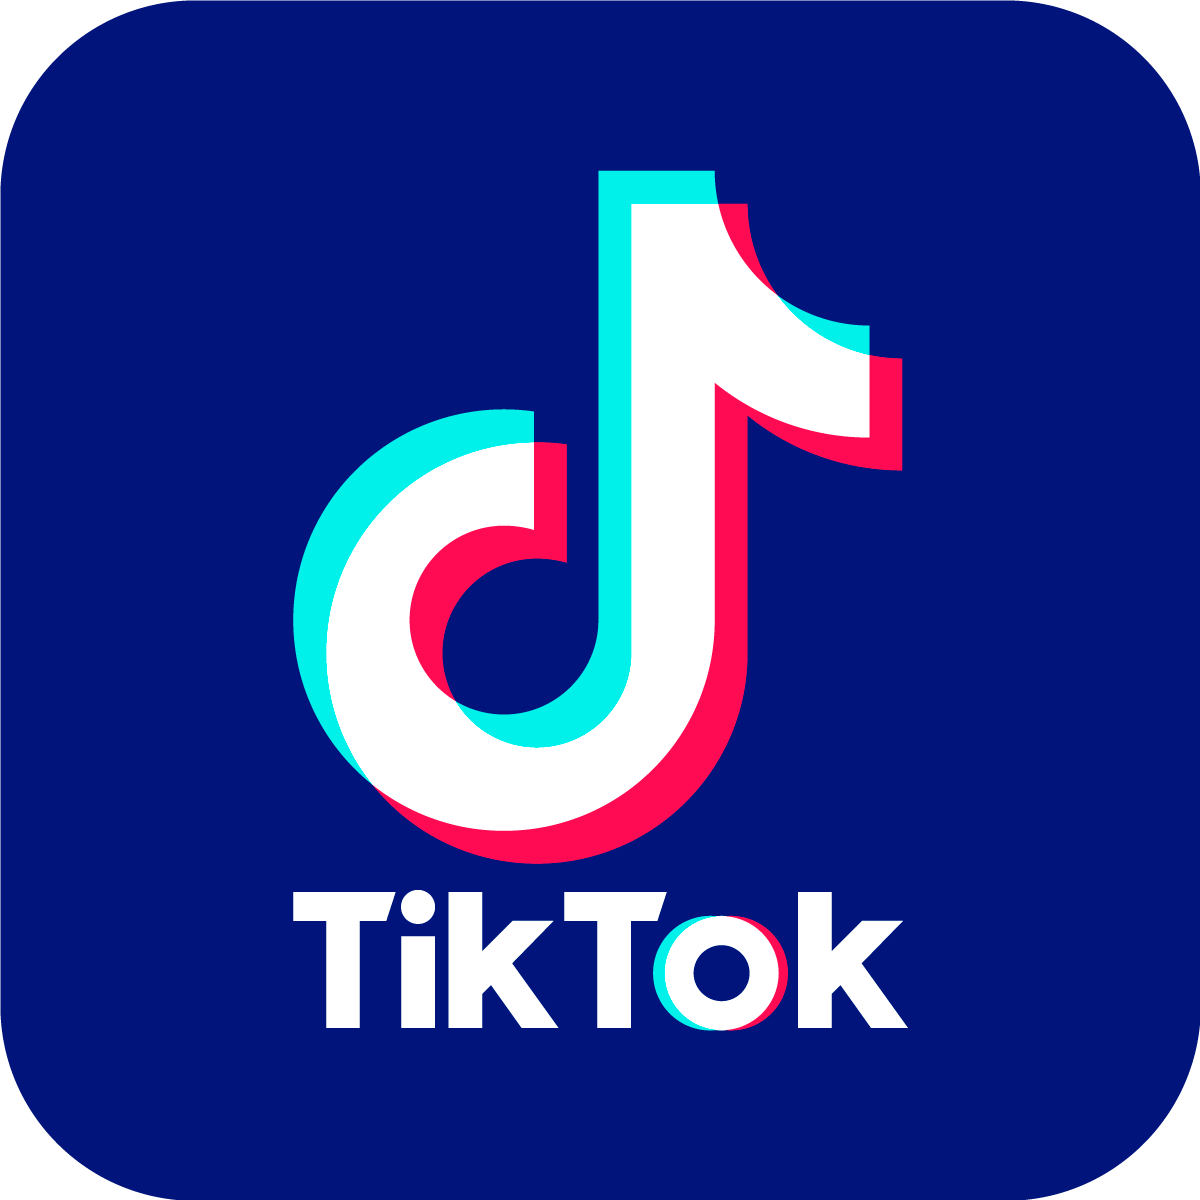 Tiktok Logo Blue picture title=